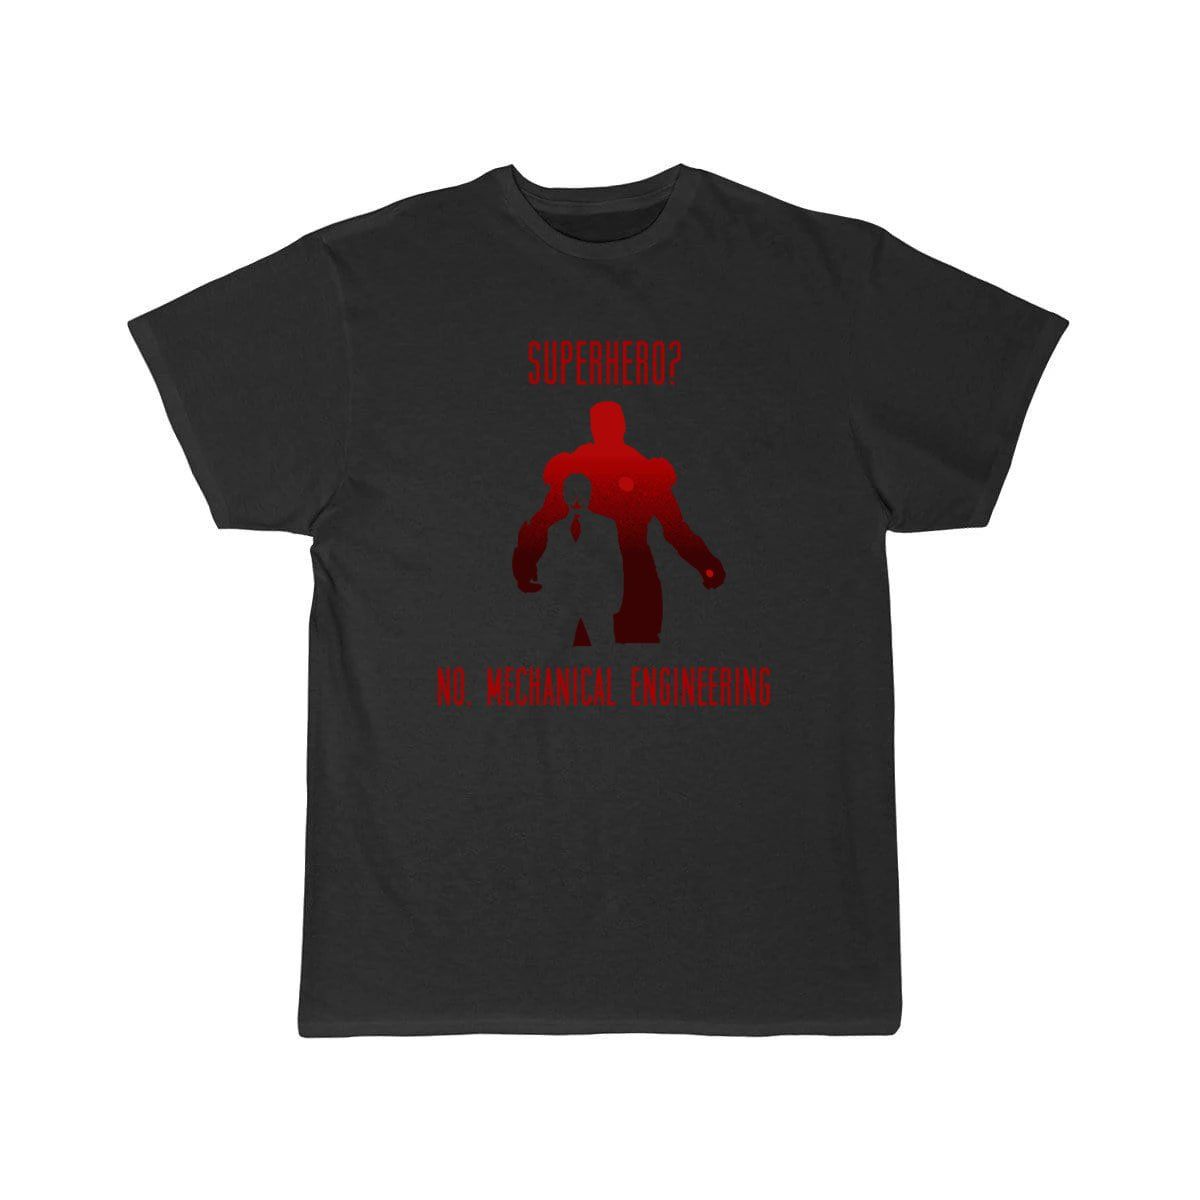 Superhero No  Mechanical engineering  T-Shirt THE AV8R